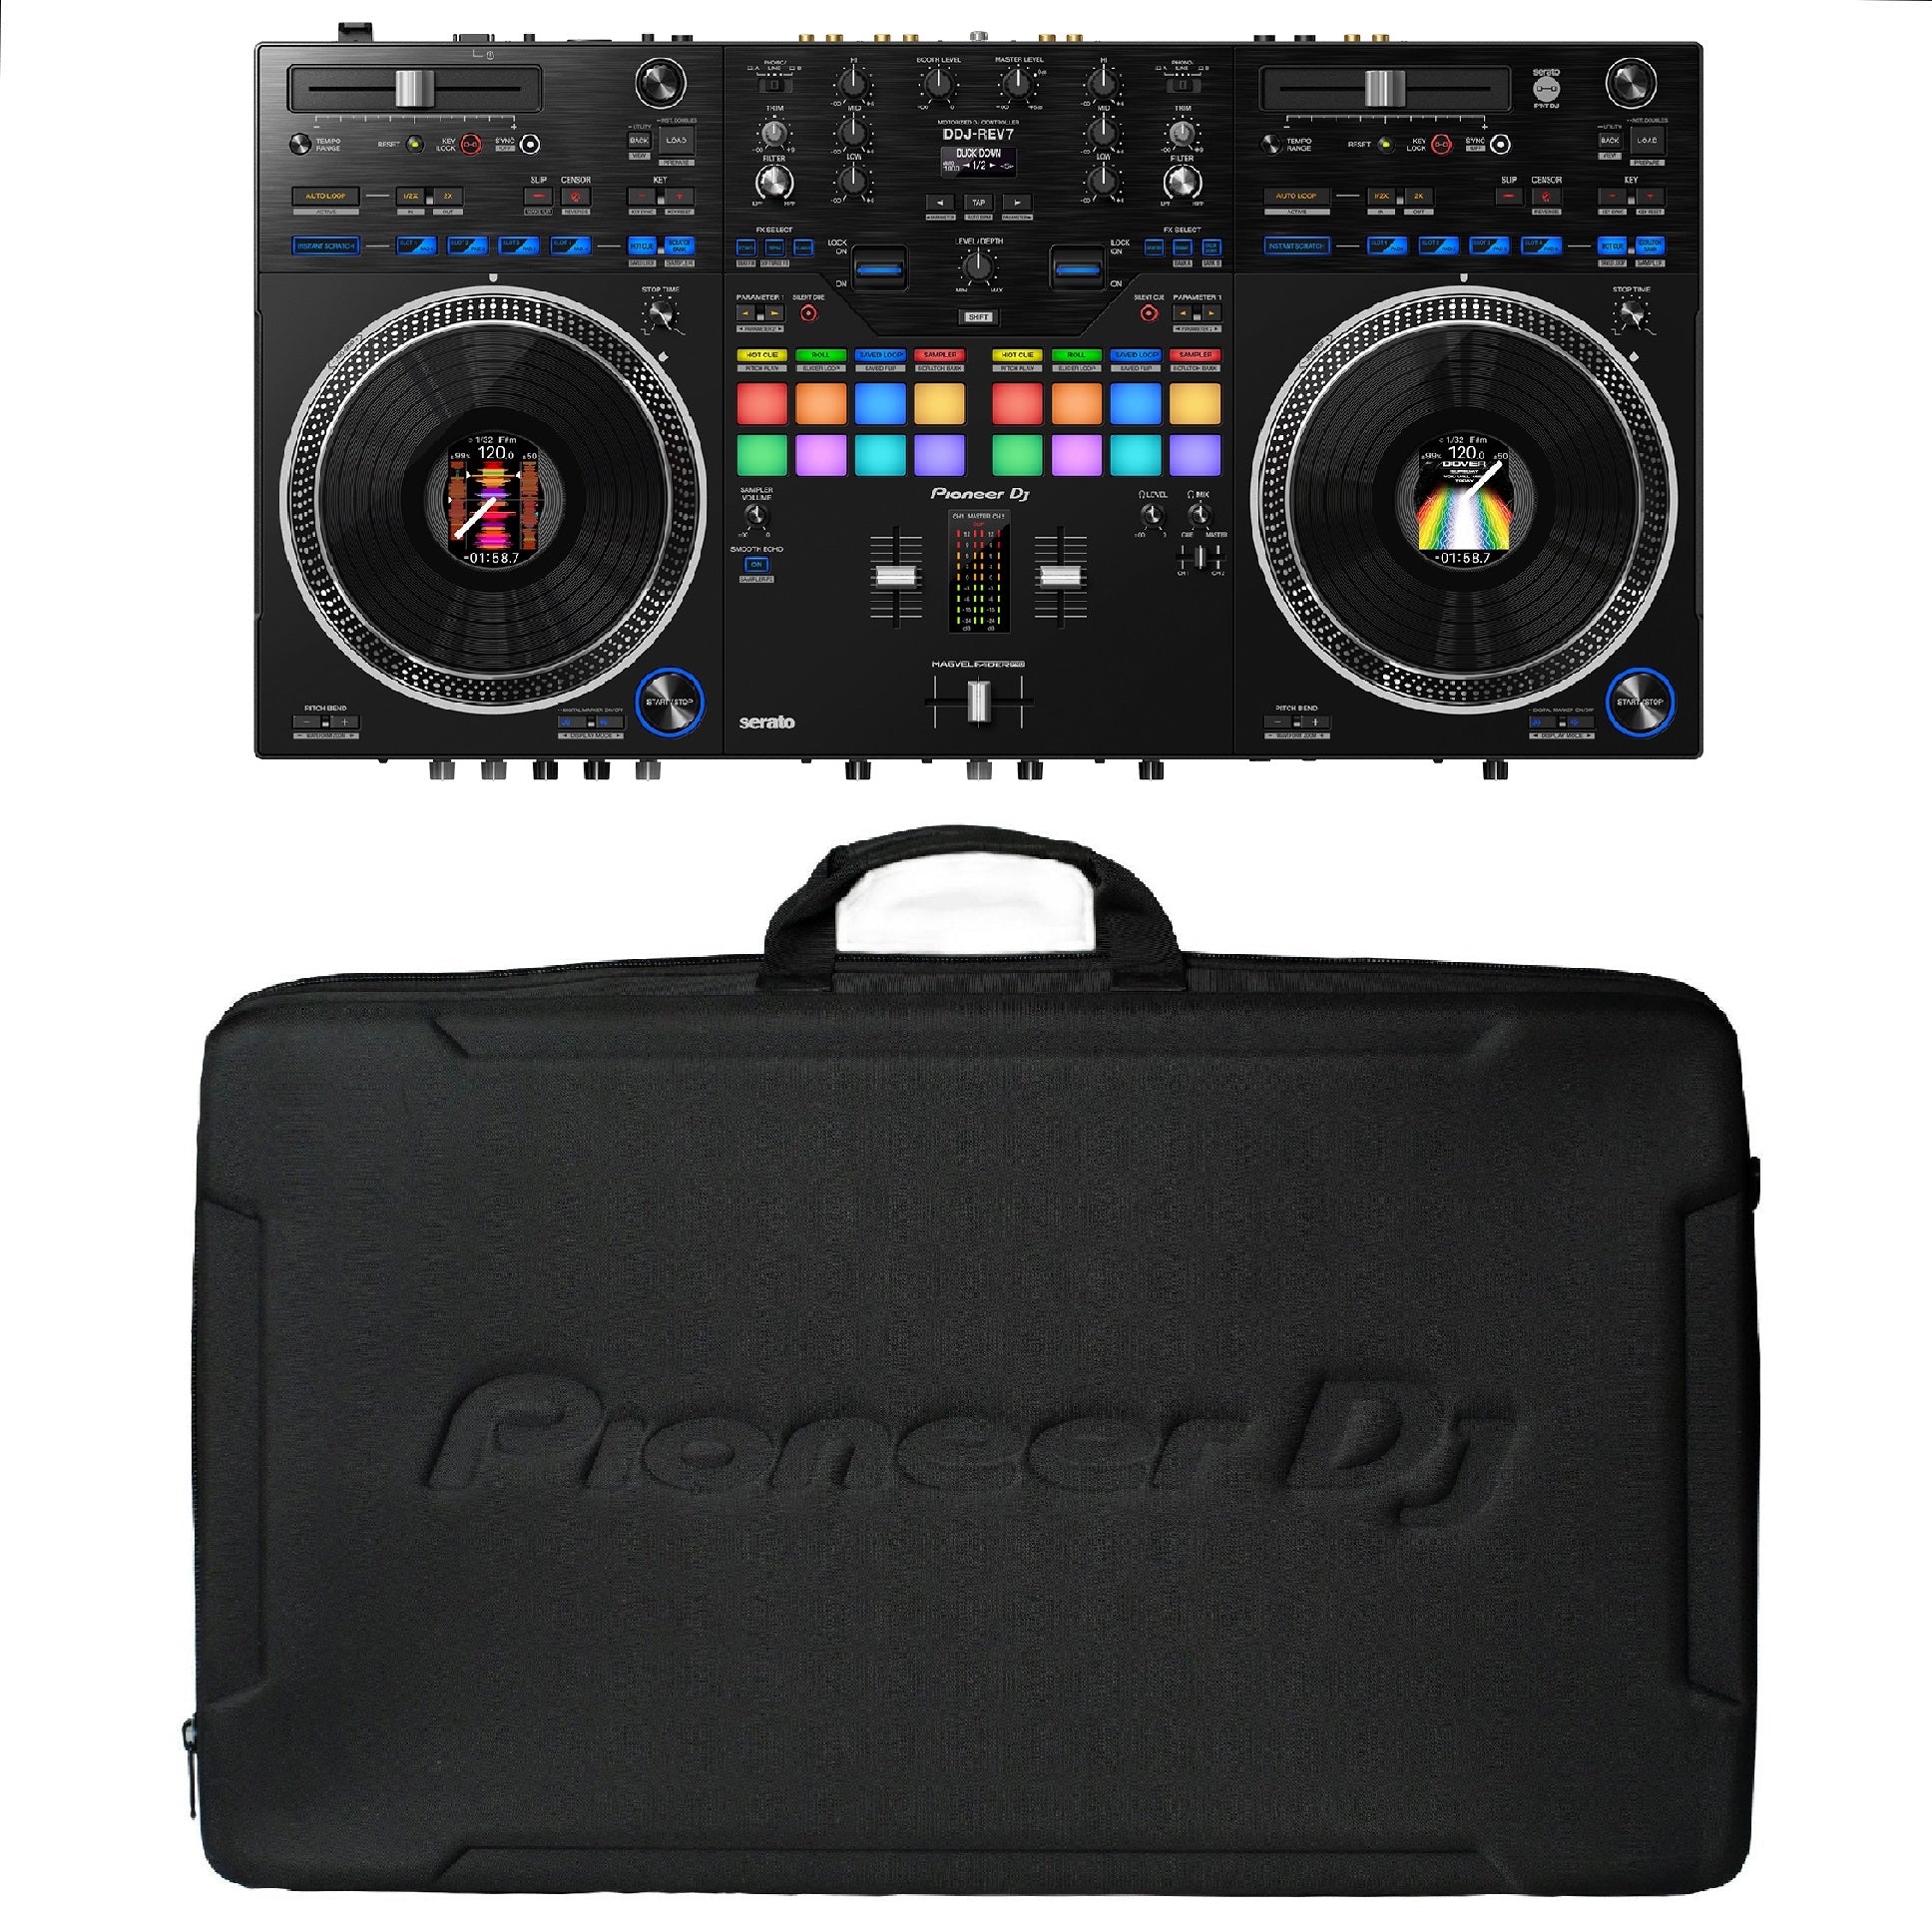 Pioneer DDJ-REV5 2-Channel Scratch-Style DJ Controller